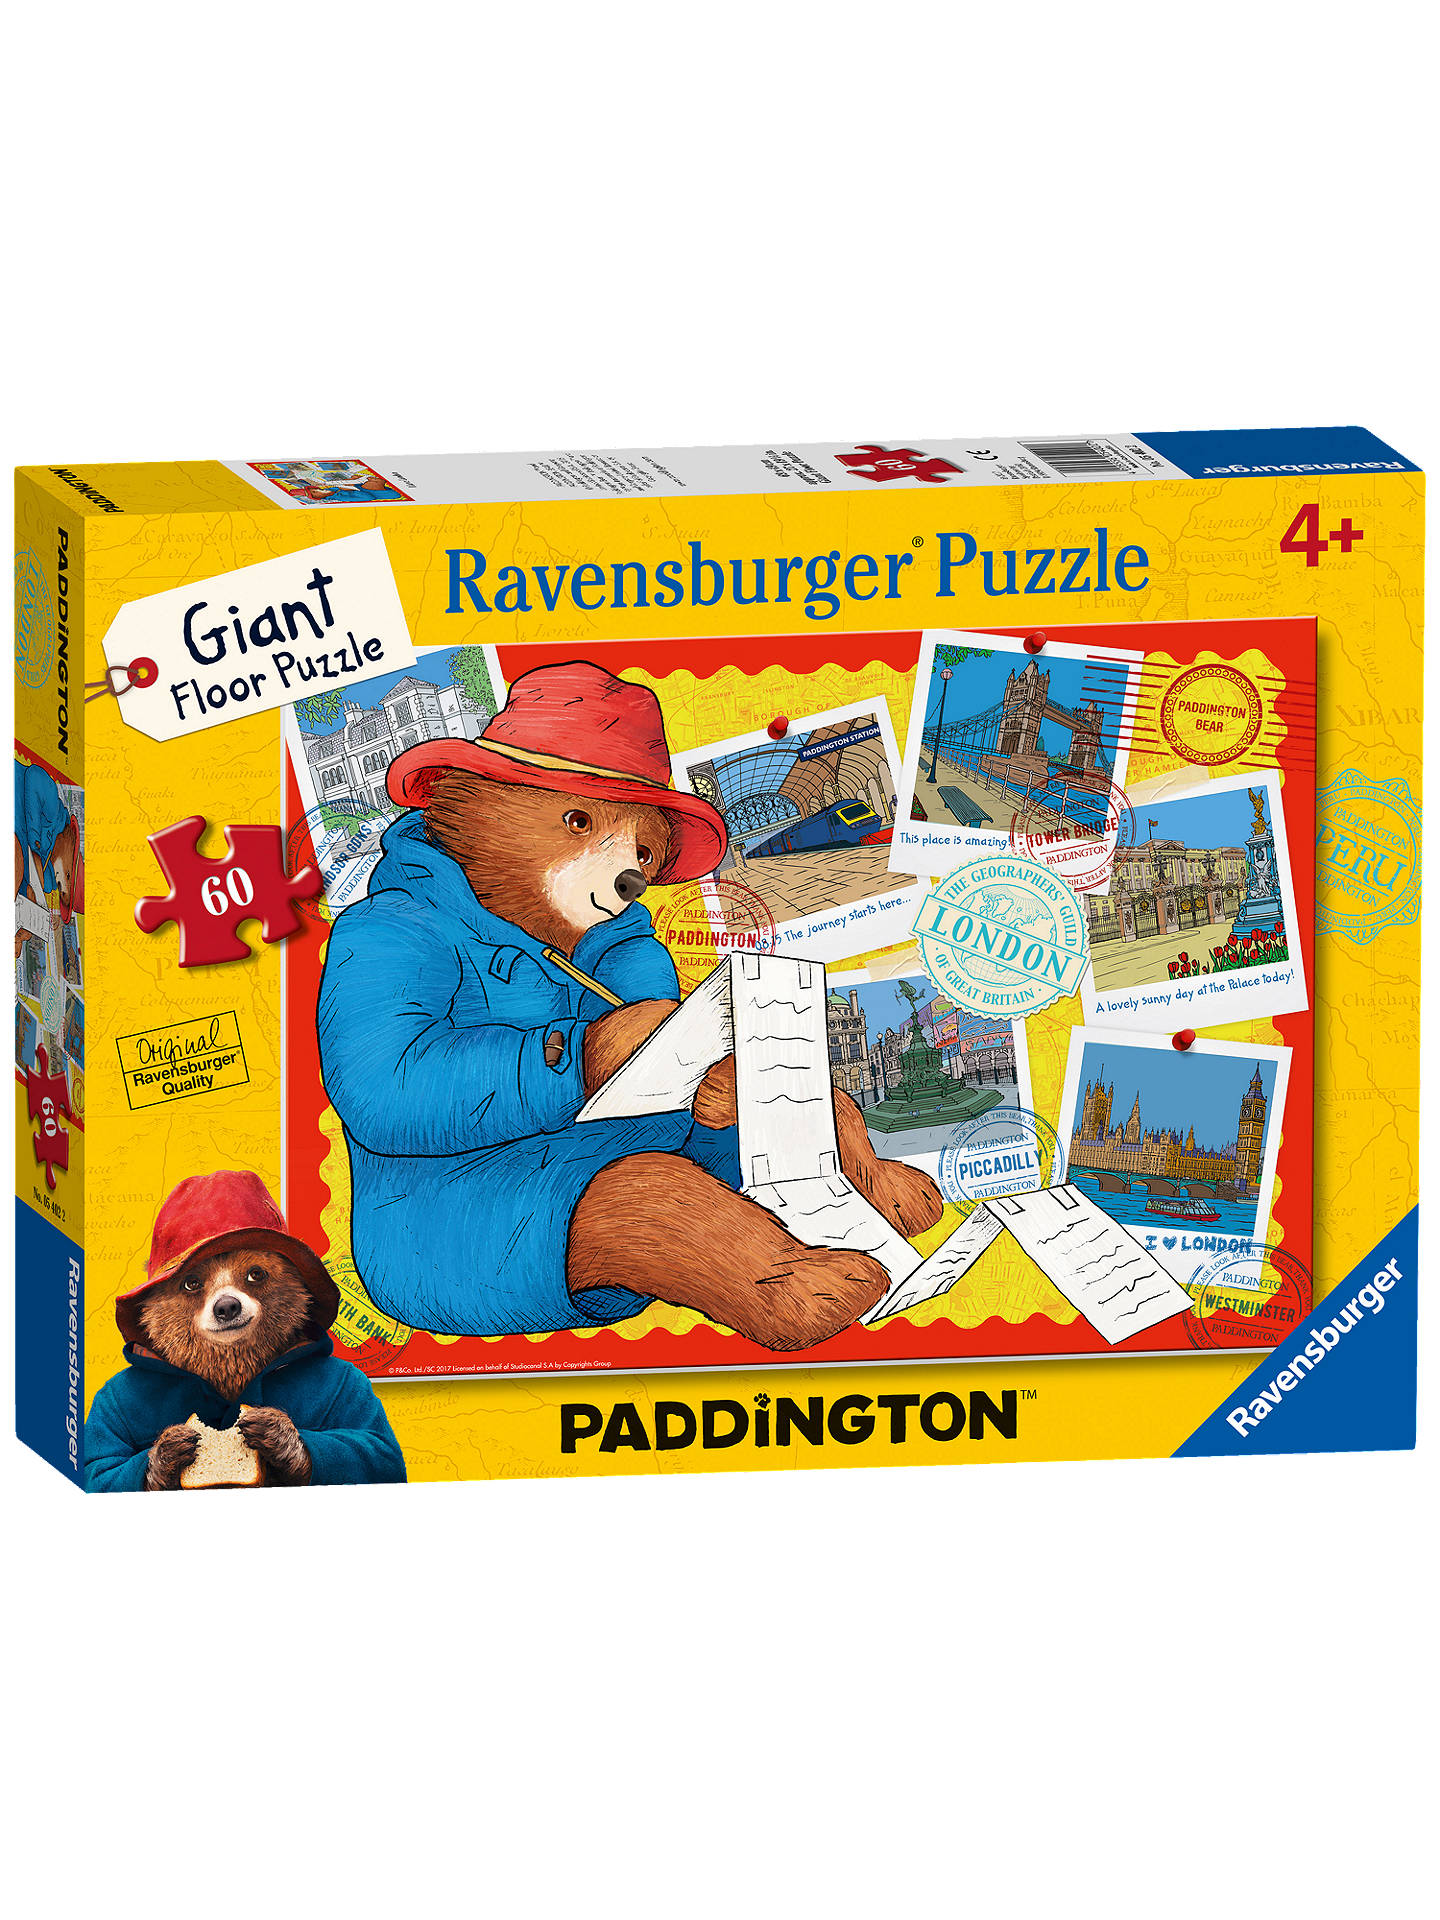 Ravensburger Paddington Bear Giant Floor Jigsaw Puzzle 60 Pieces